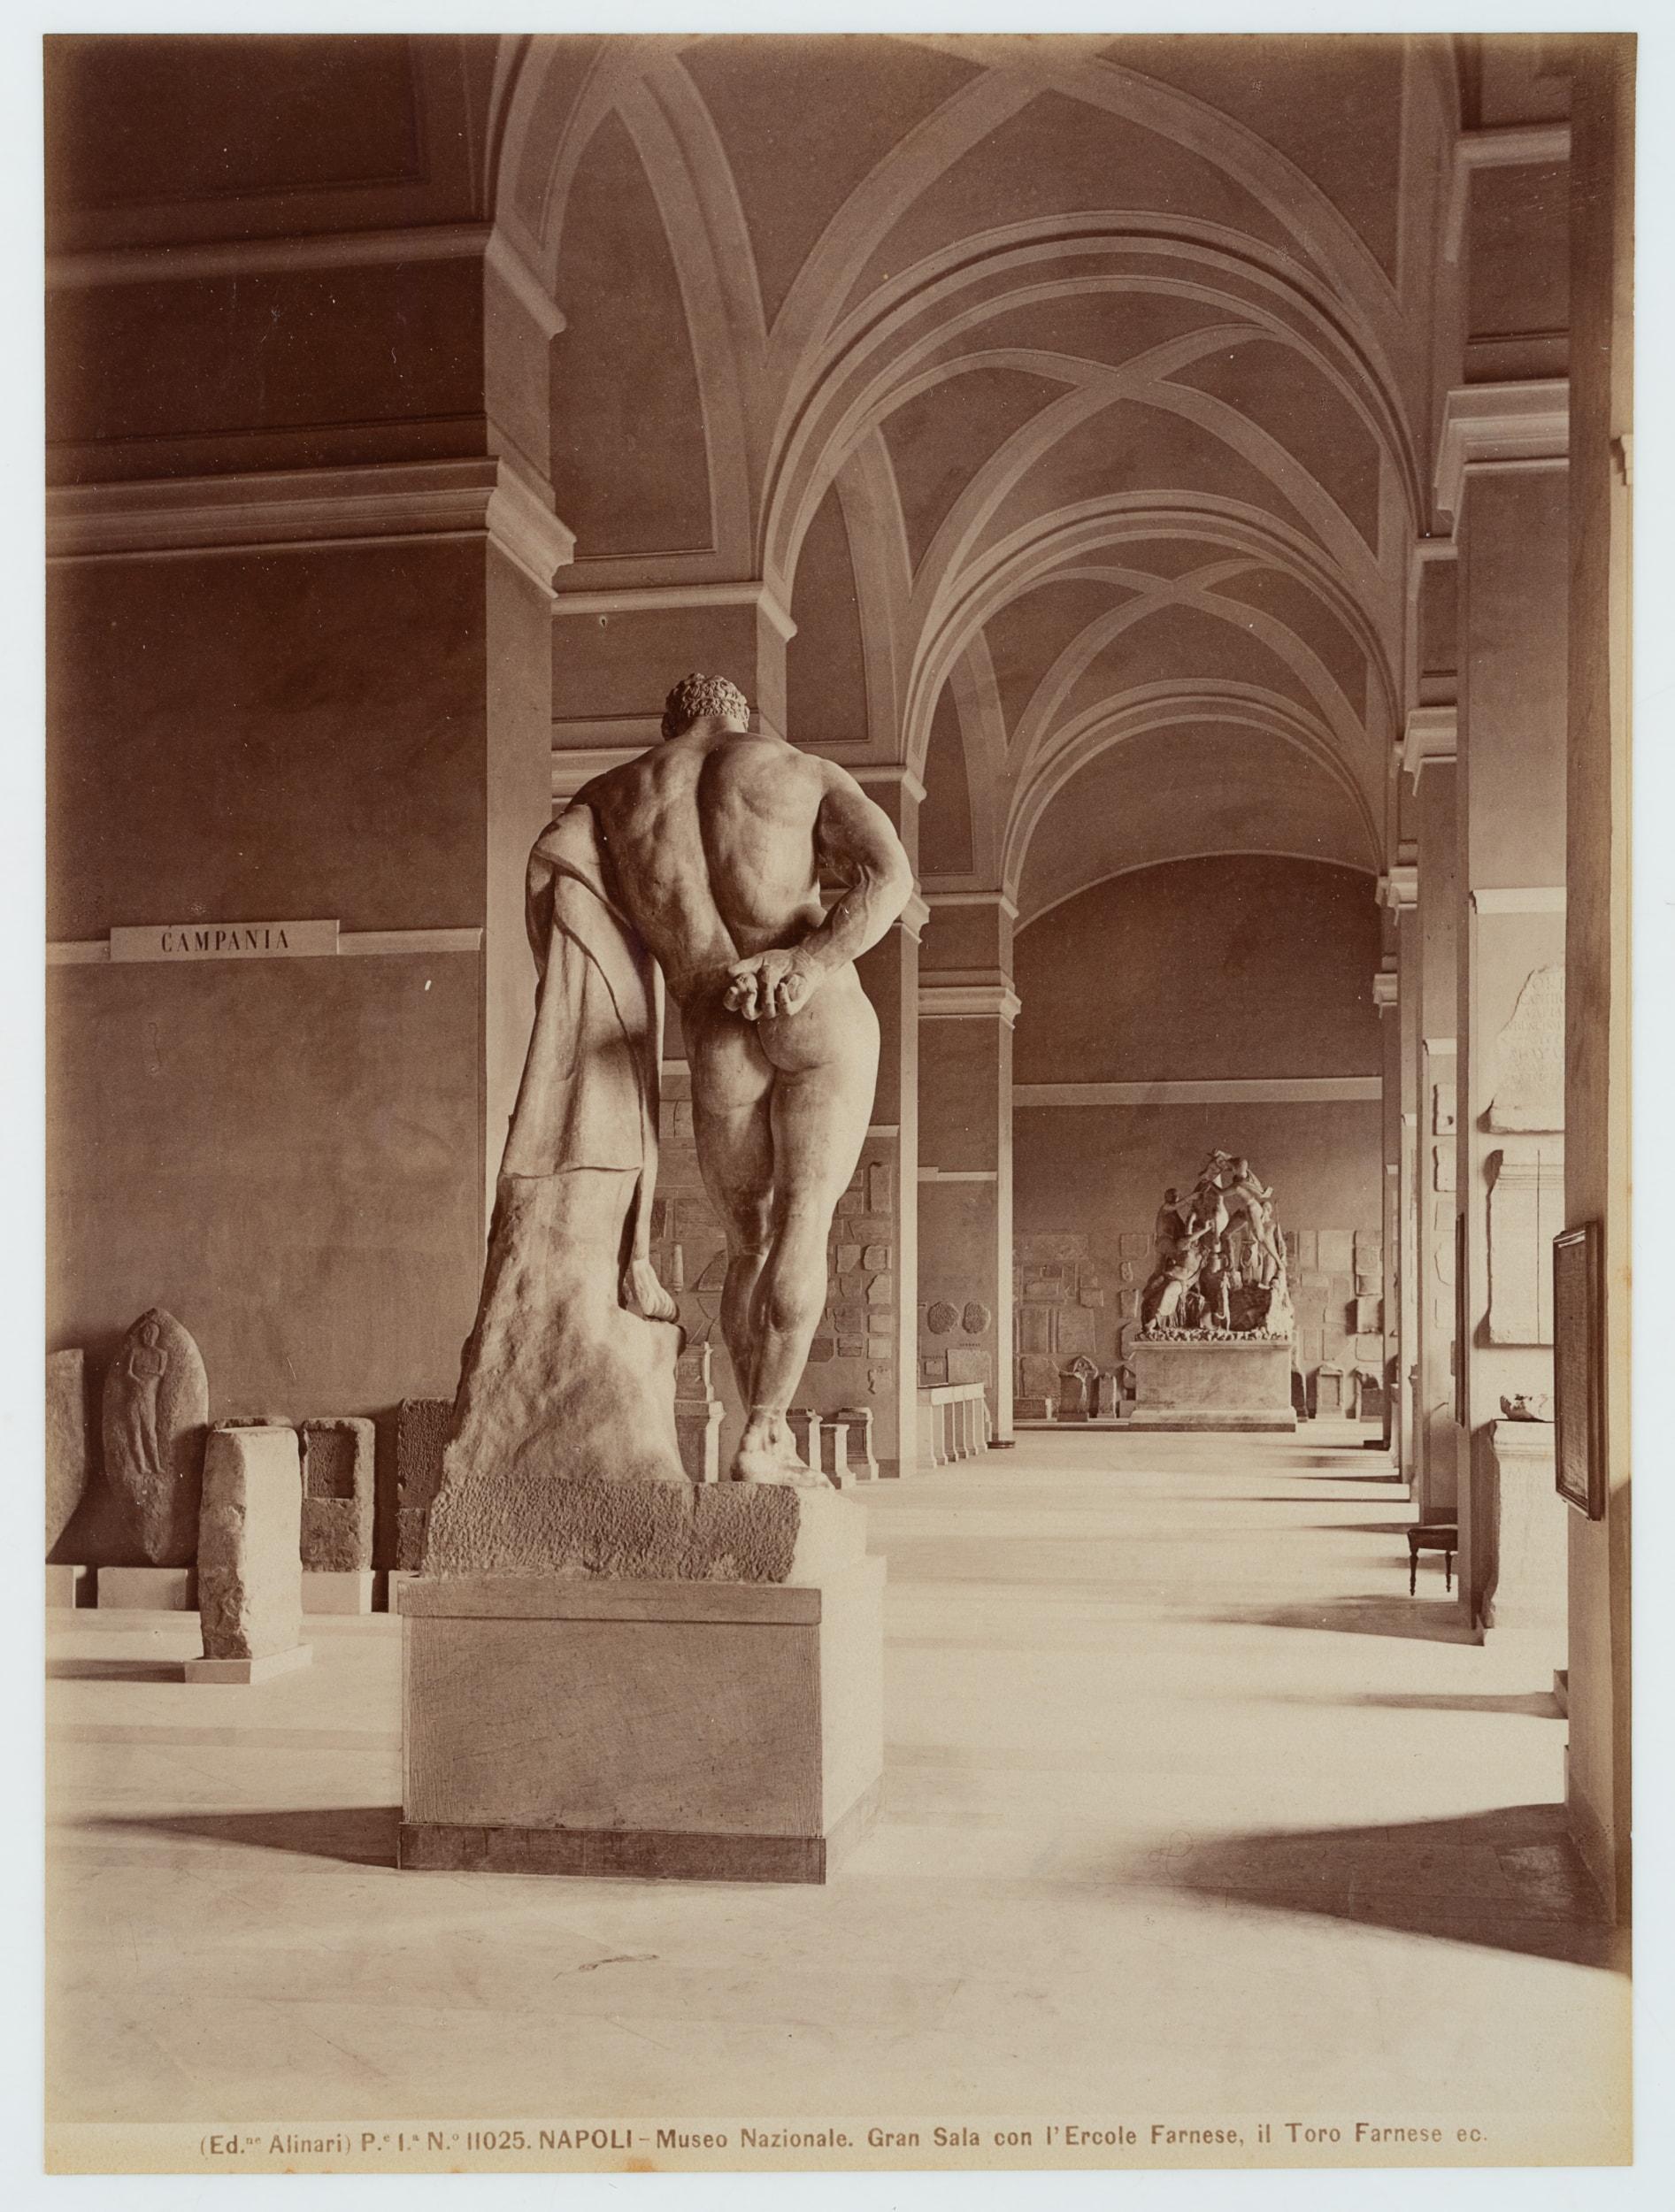 Herkules Farnese, Musée national, Neapel - Photograph de Fratelli Alinari